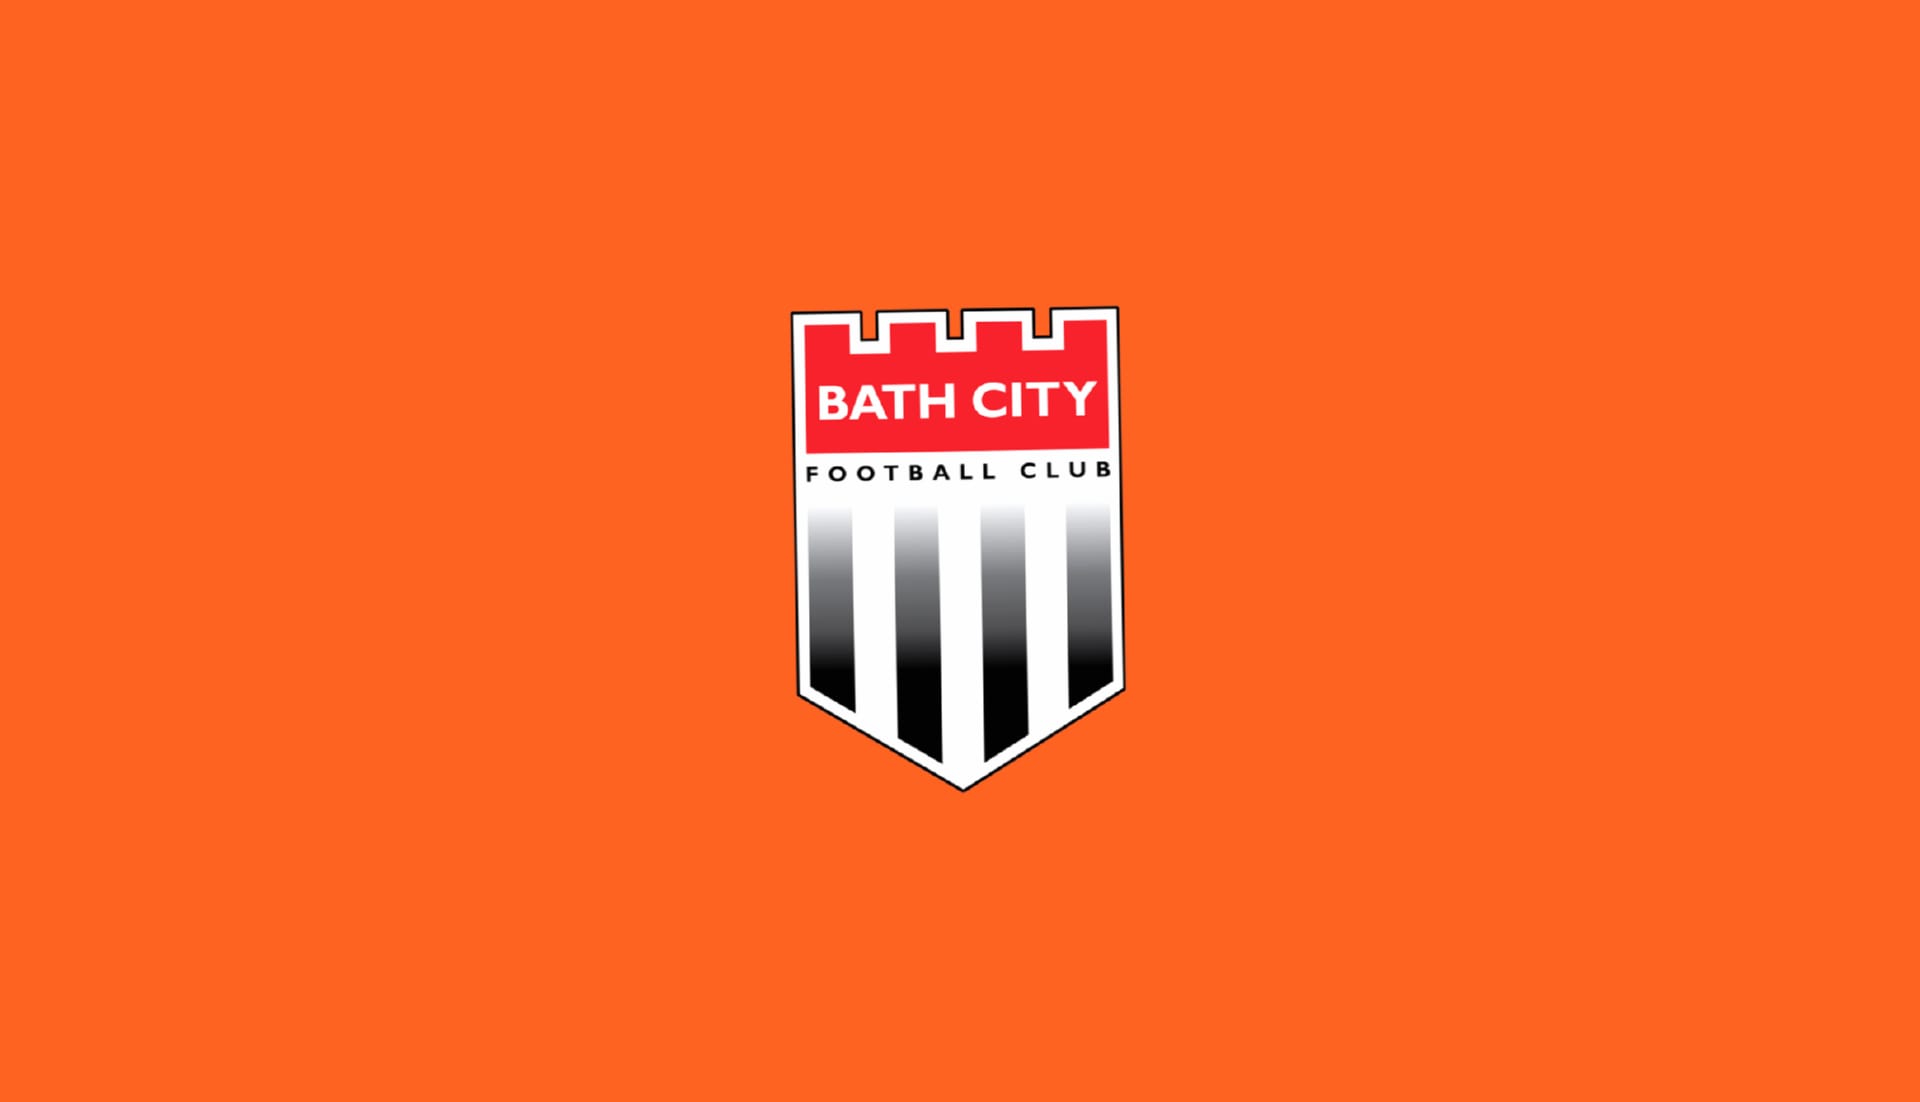 Bath City F.C at 1024 x 1024 iPad size wallpapers HD quality